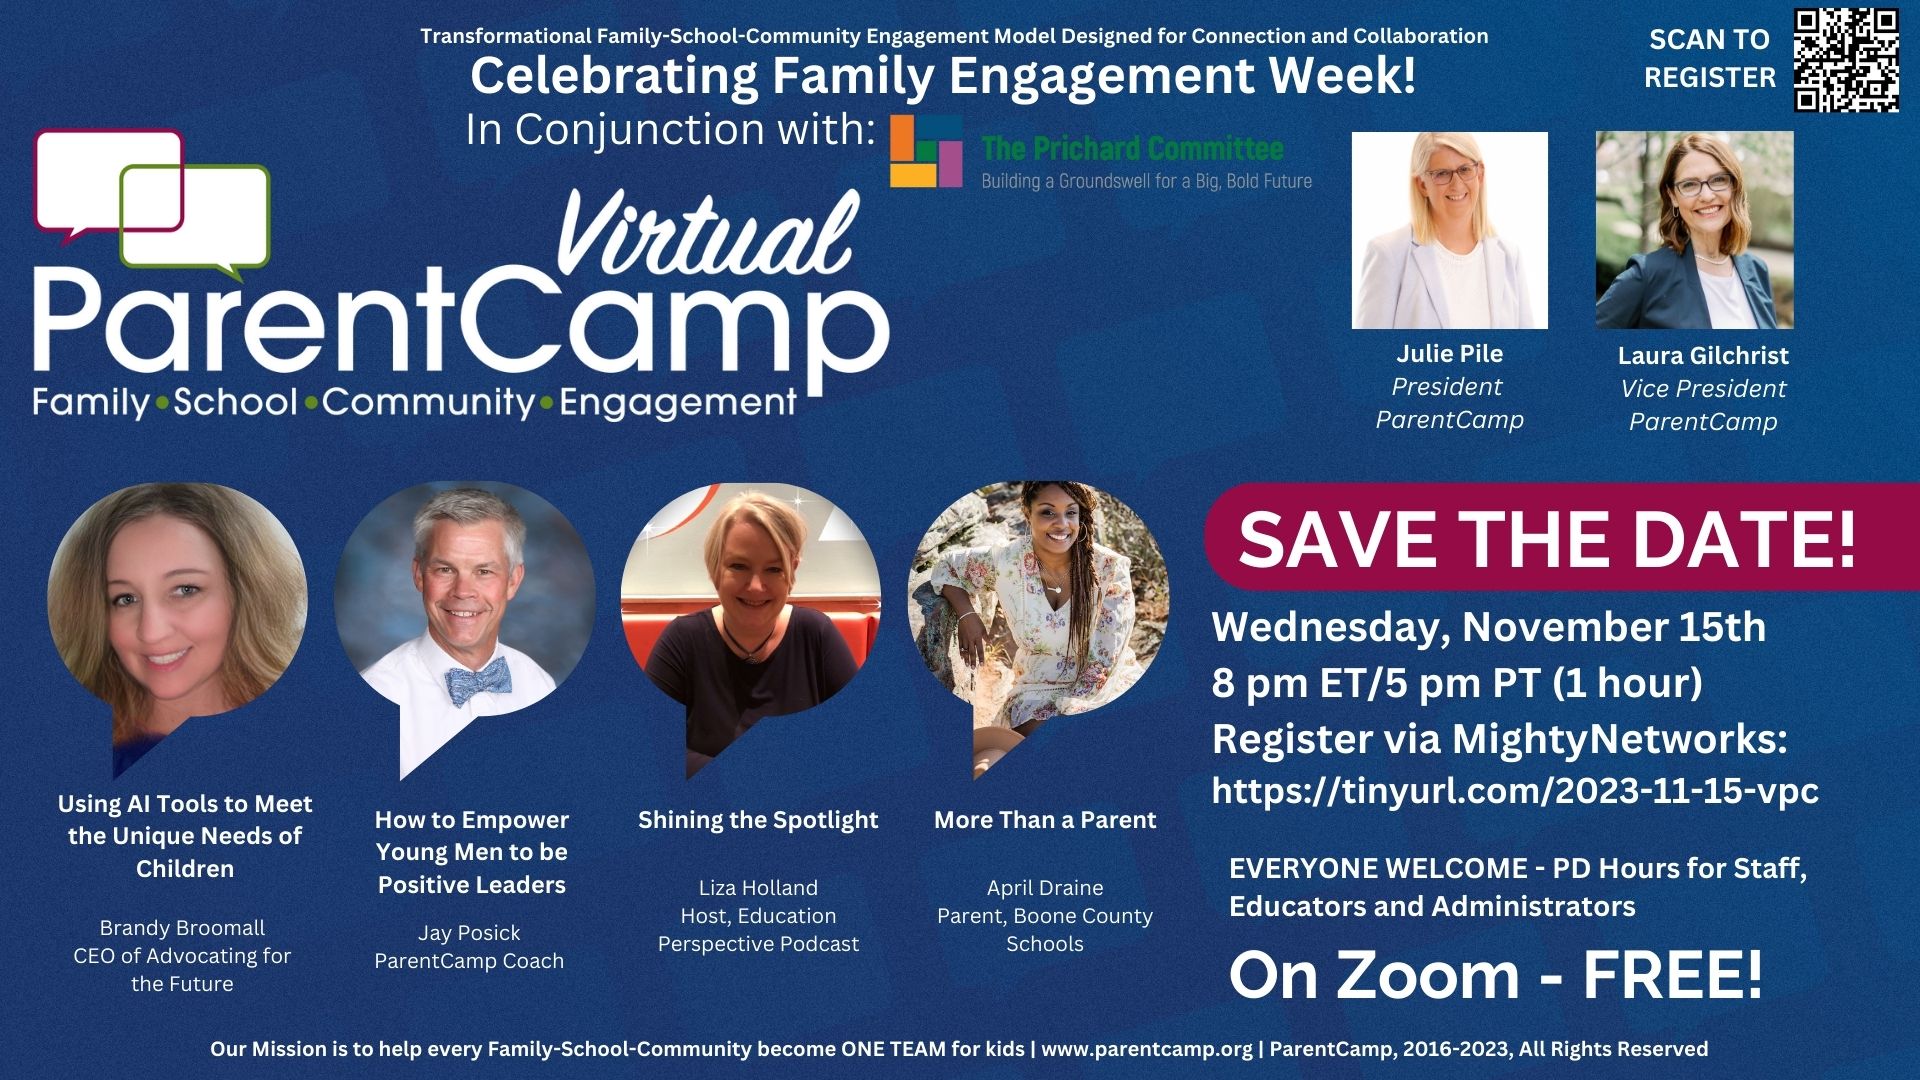 2023-11-15-Virtual-ParentCamp-PR-Image-All-Rooms